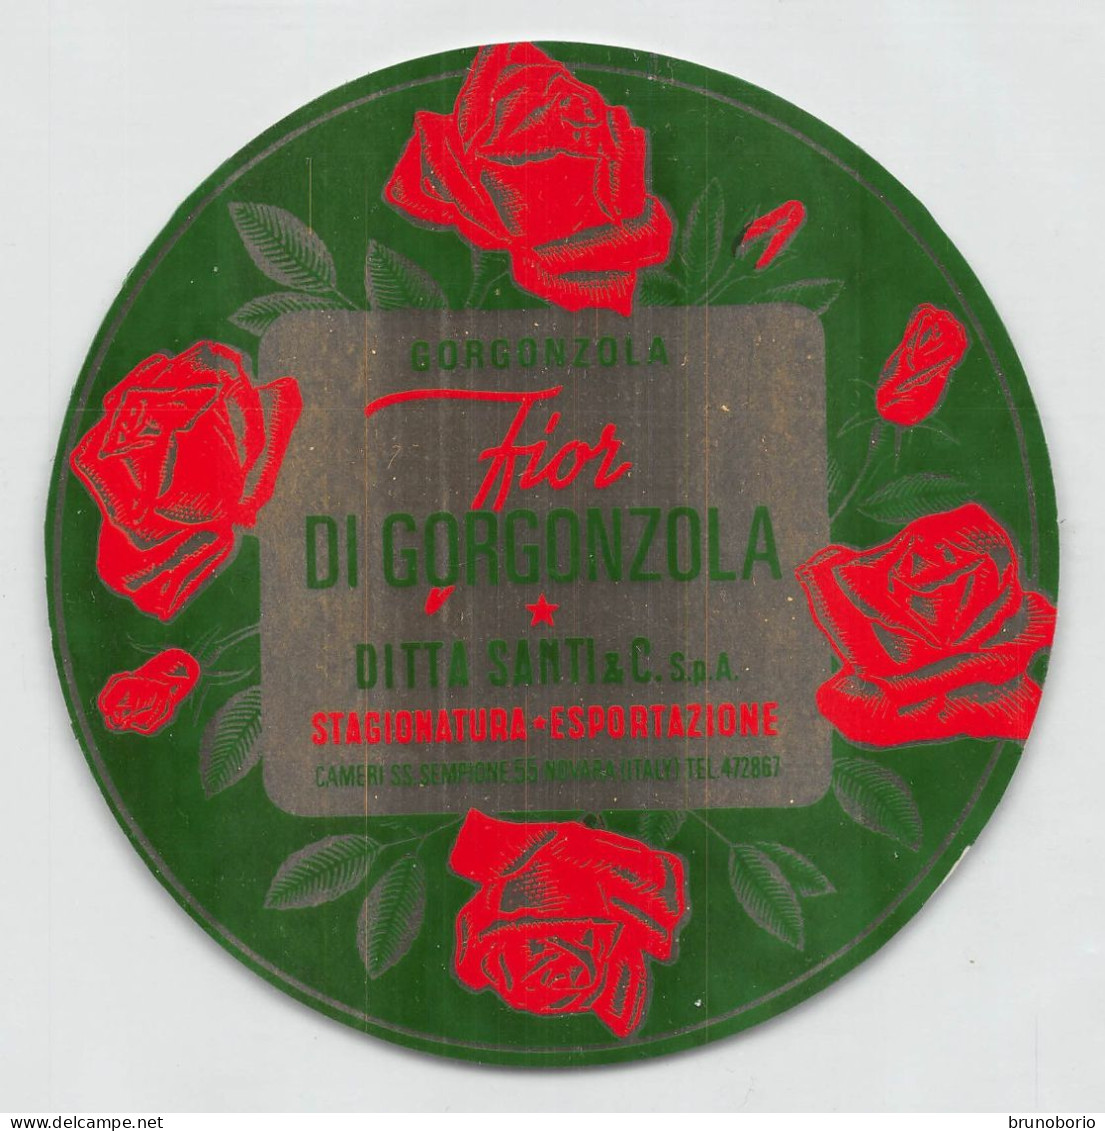 00119 "GRGONZOLA, FIOR DI GORGONZOLA - DITTA SANTI & C. SPA - CAMERI - NOVARA"  ETICH. ORIG ROSE - NOTIZIE AZIENDA - Cheese